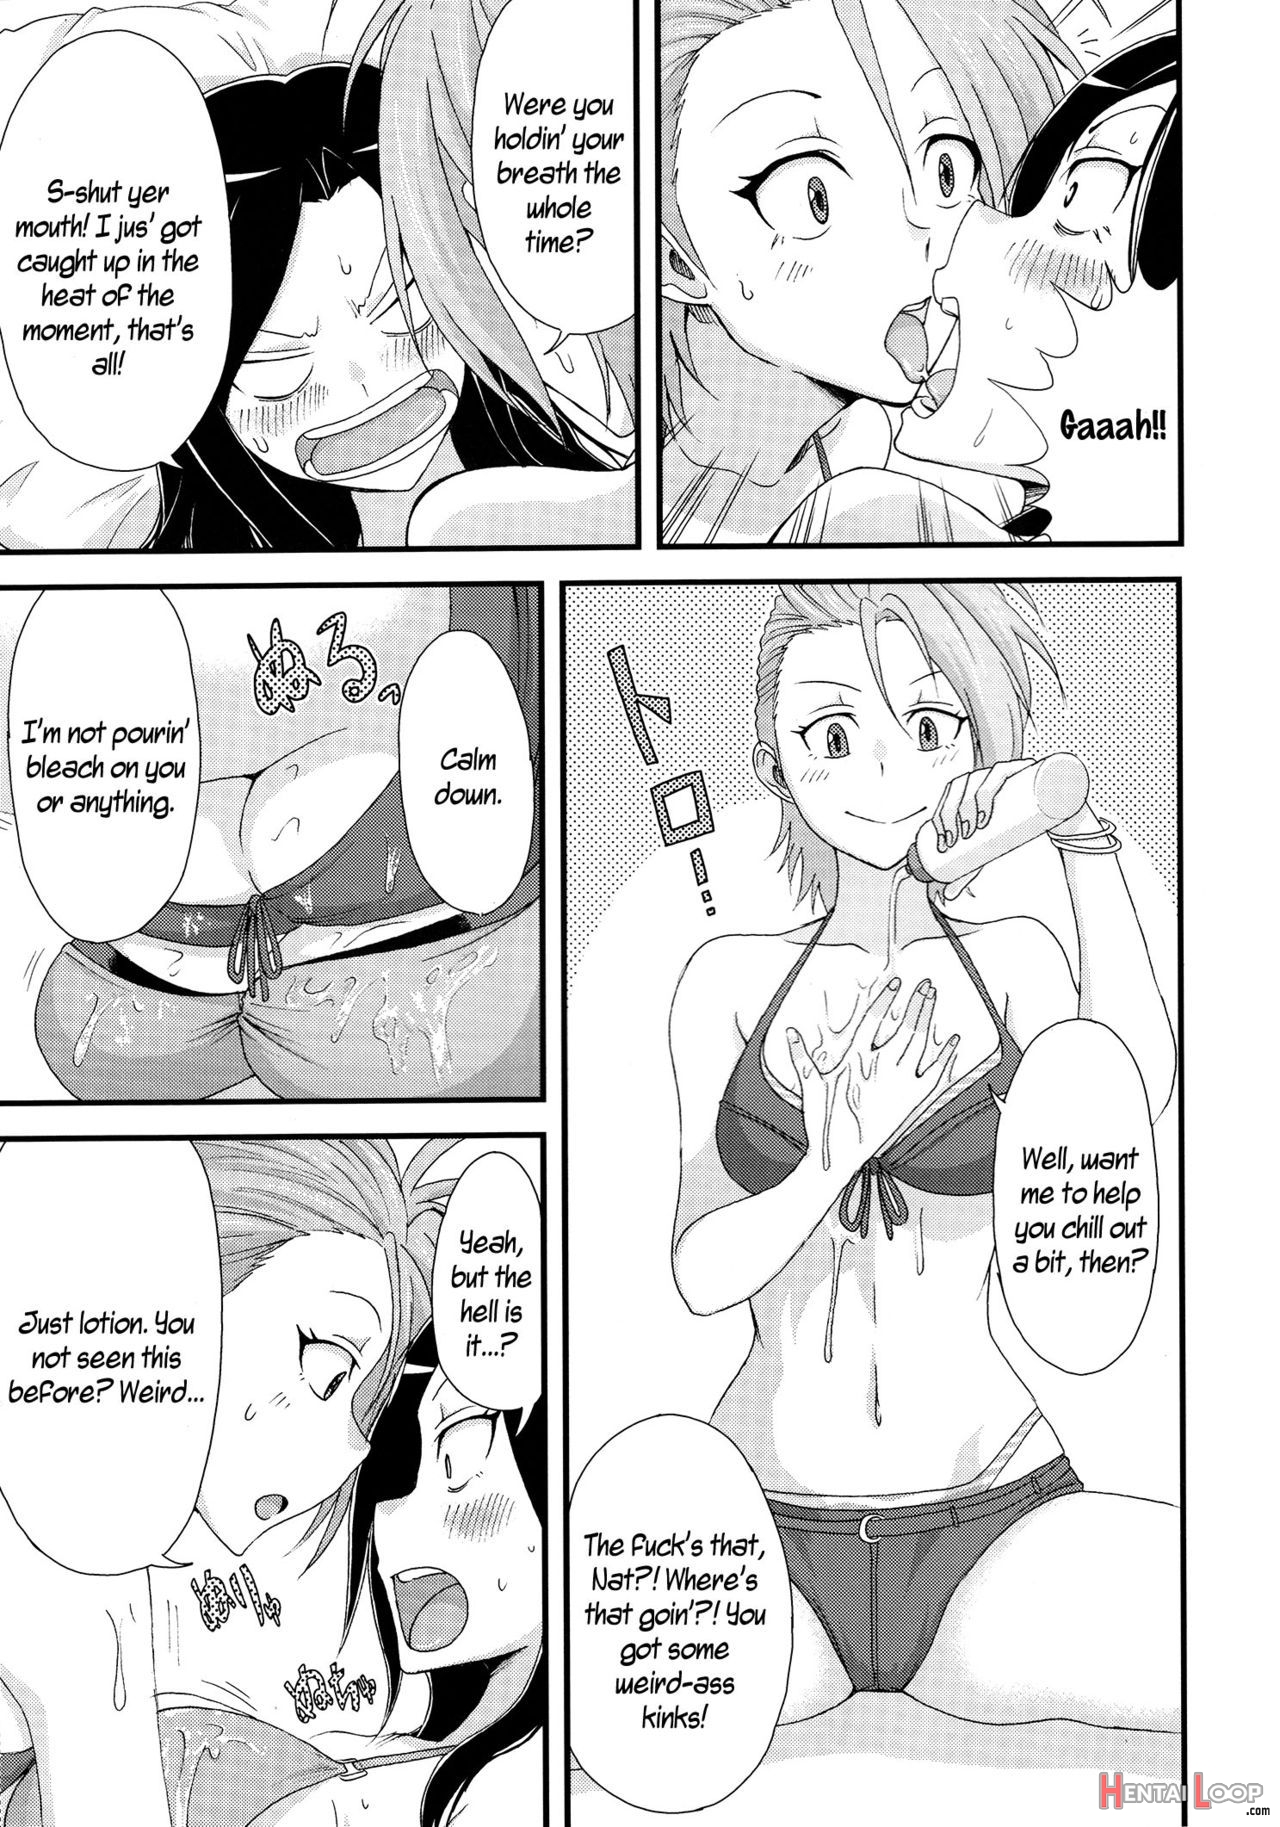 Natsuki And Takumi's Oneone Livedie Battle page 6